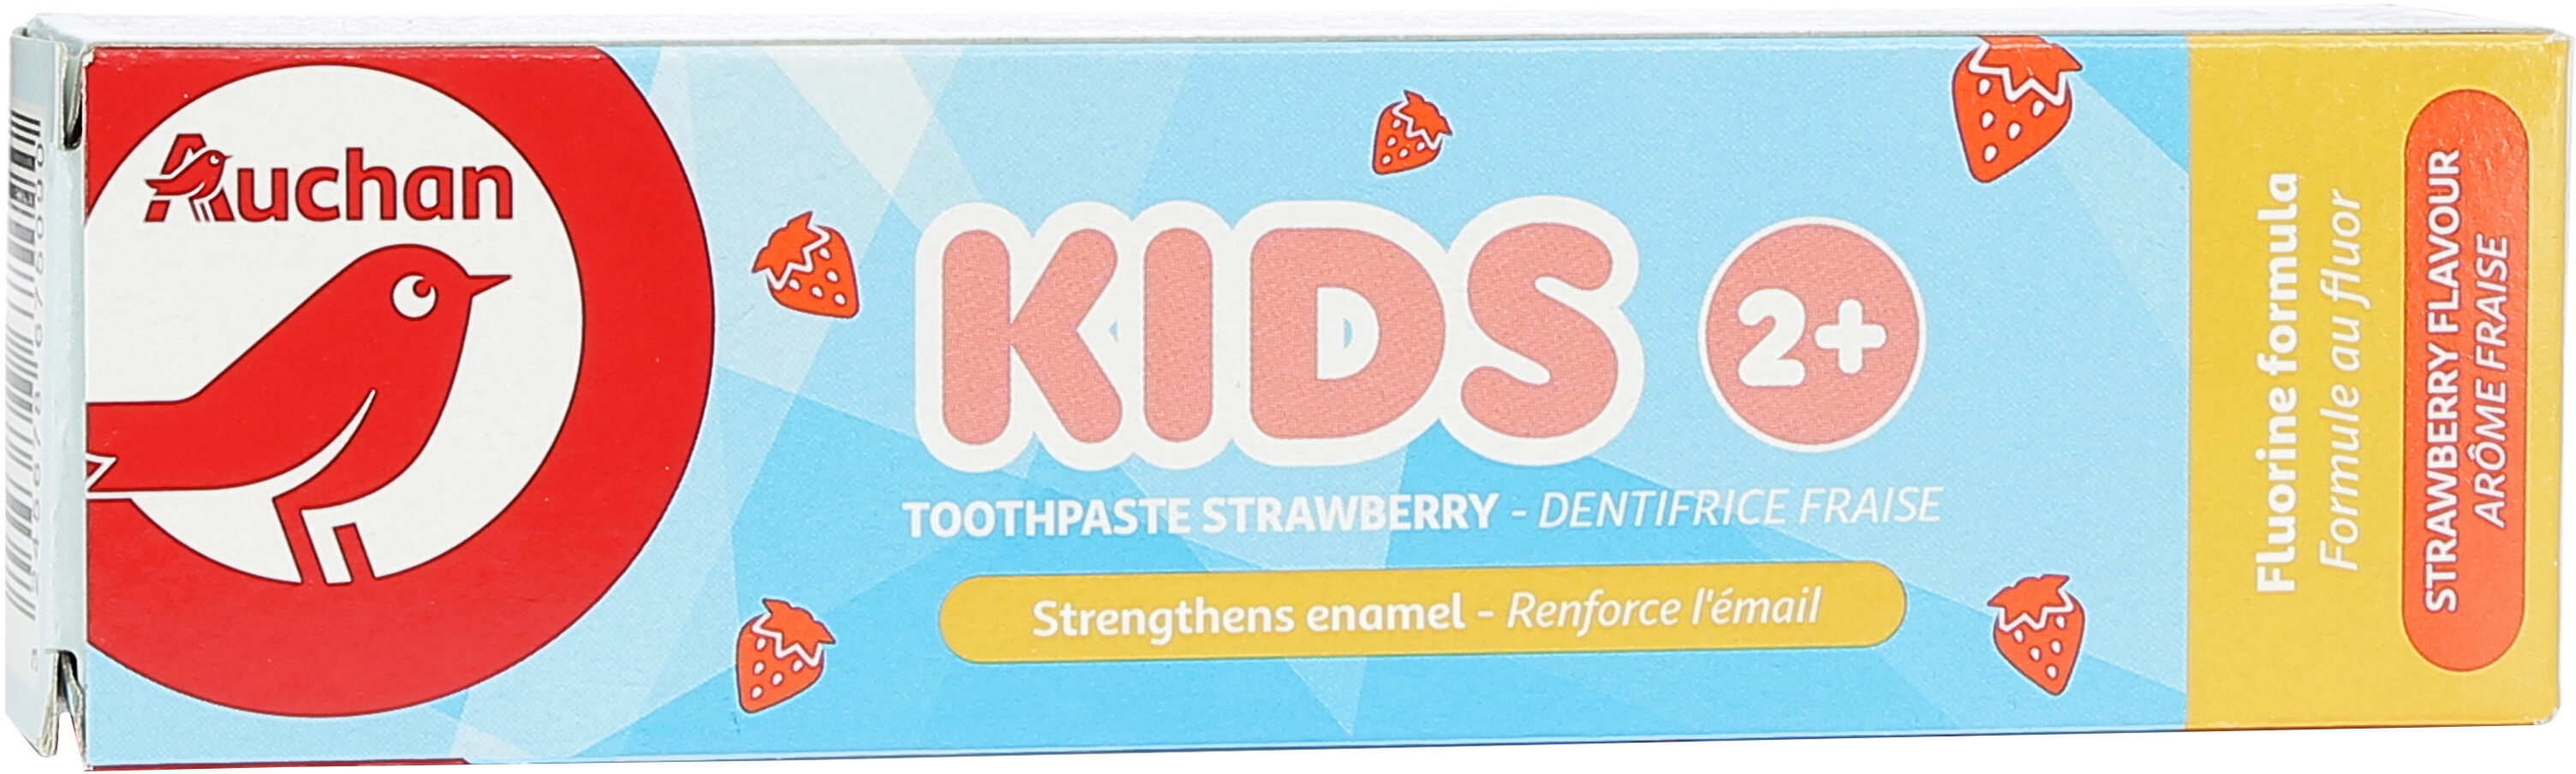 Auchan kids dentifrice - fraise - enfants 2 + - 50ml - Produto - fr